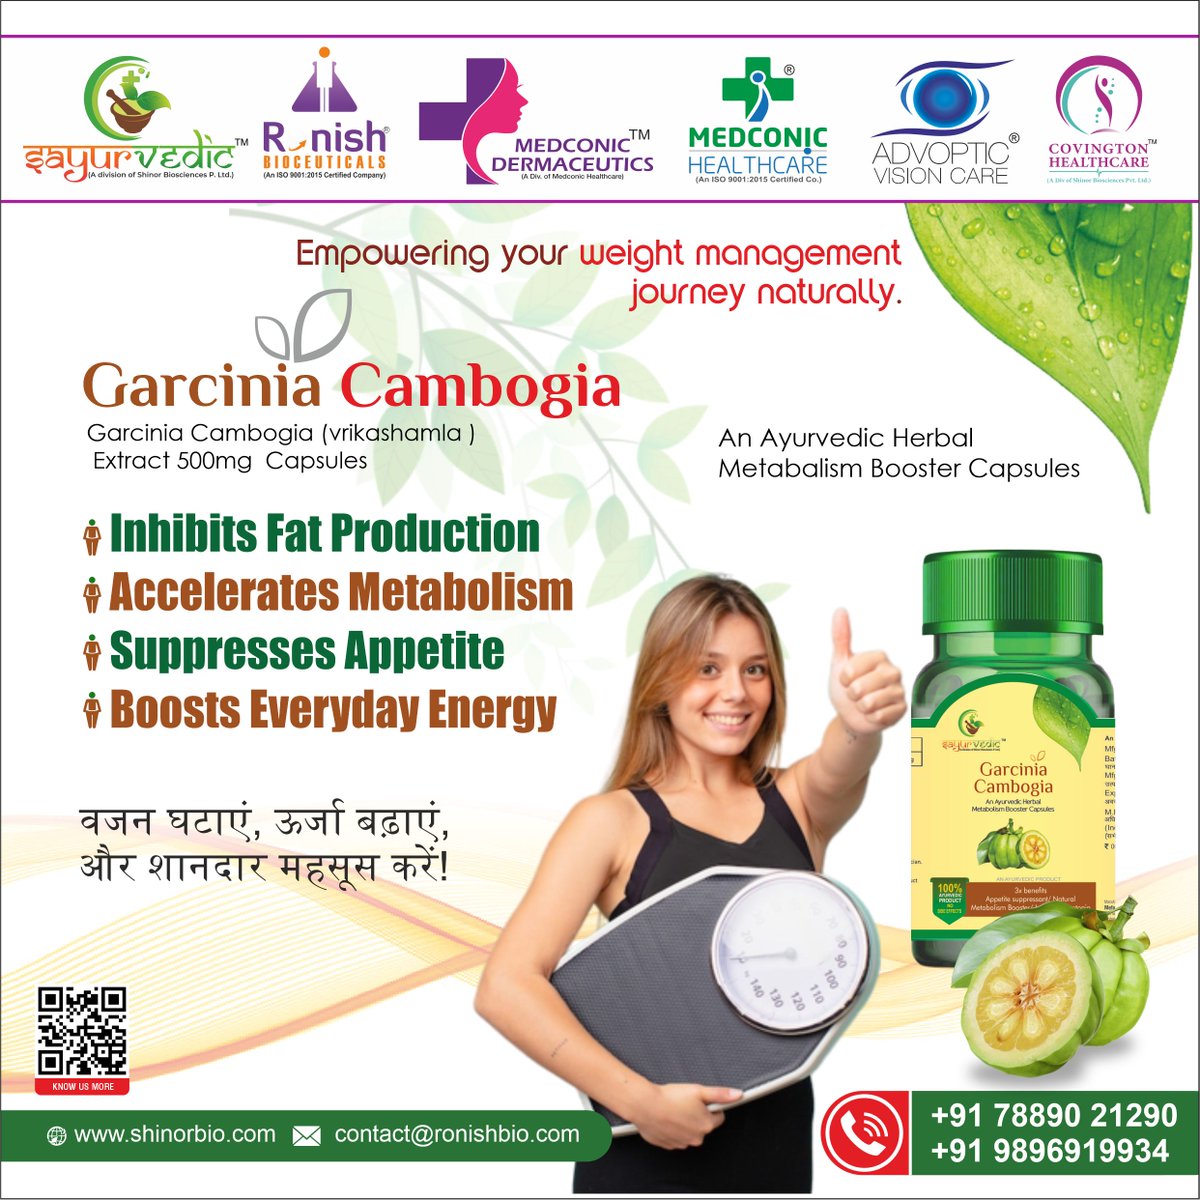 🌿 Introducing Sayurvedic's premium offering: GARCINIA CAMBOGIA! 🌿

Harness the power of nature with our Garcinia Cambogia (Vrikashamla) Extract 500mg! 🍃

#GarciniaCambogia #Sayurvedic #NaturalHealth #WellnessJourney #PharmaFranchise #HealthAndWellness #PureAndPotent #PCDPharma